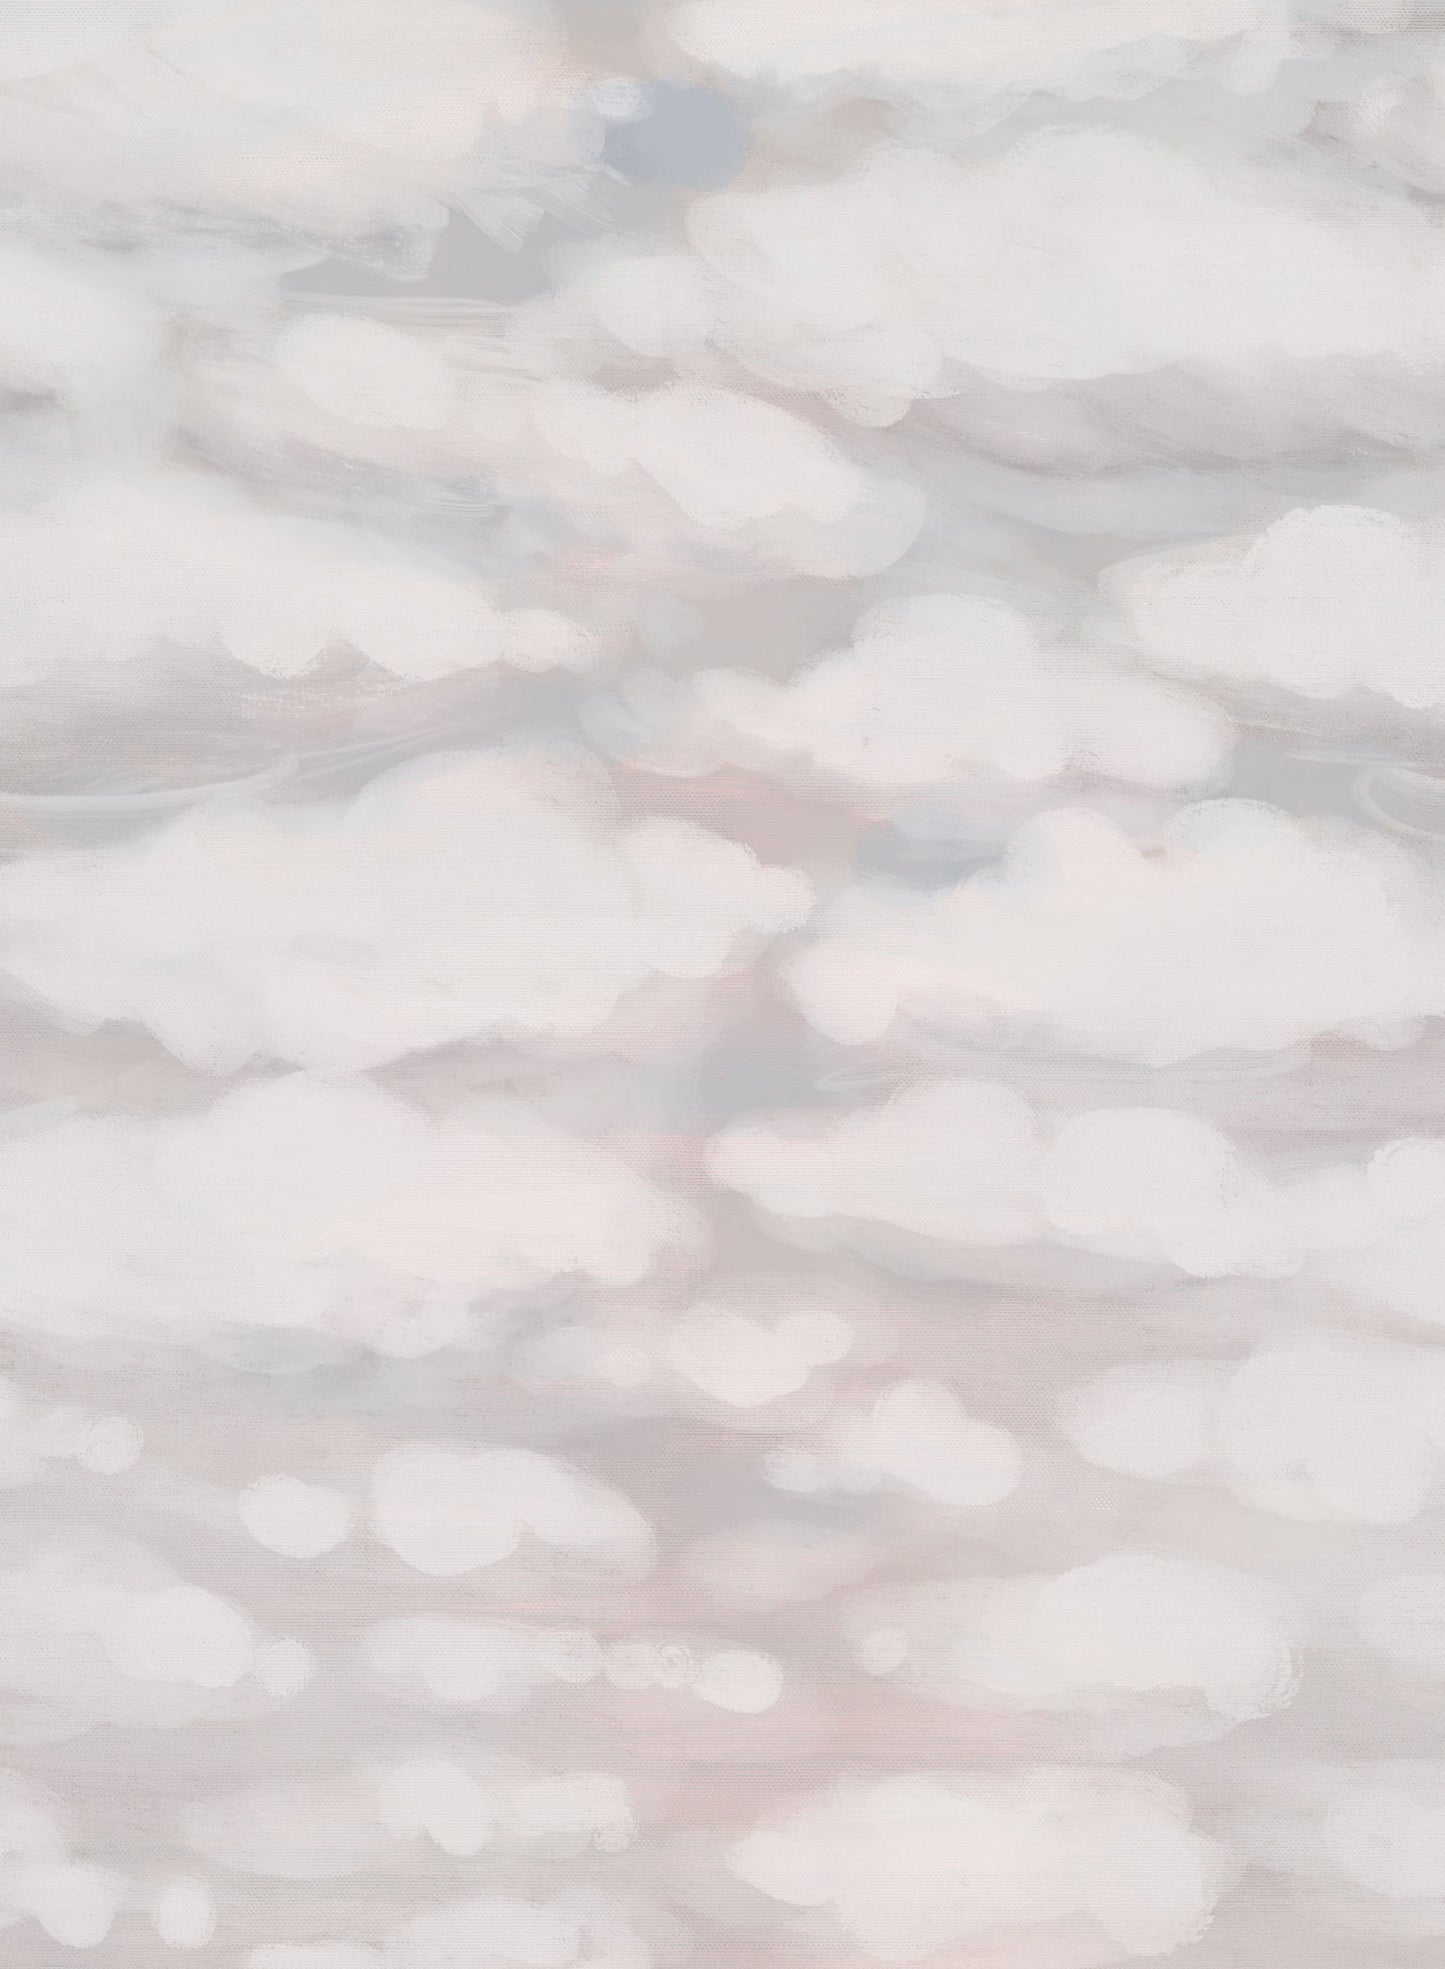 Bubblegum Skies, Mural